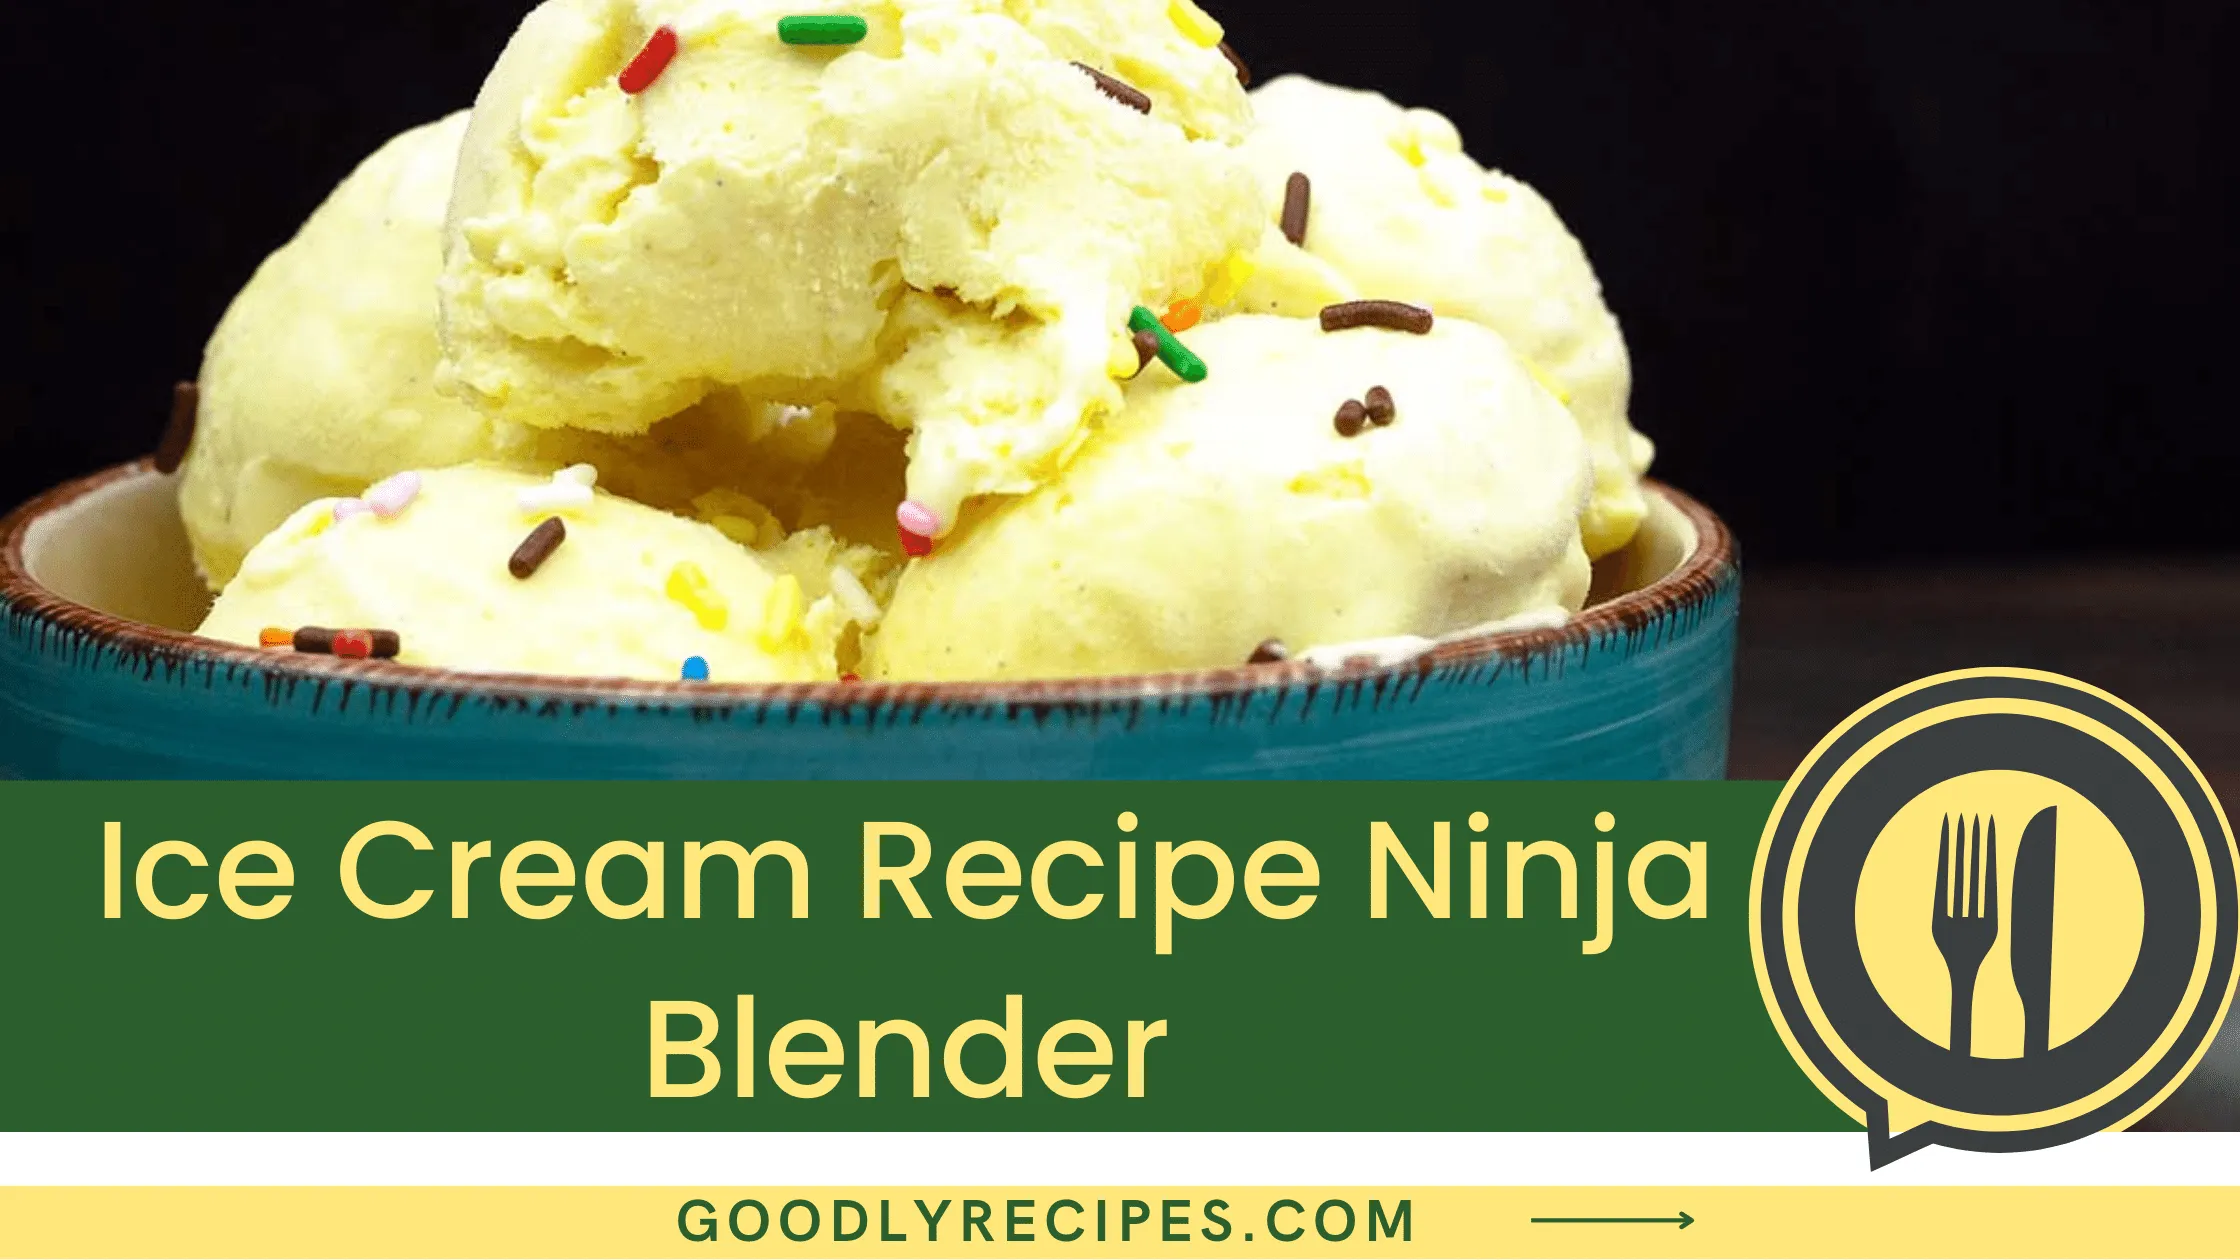 Ice Cream Recipe Ninja Blender